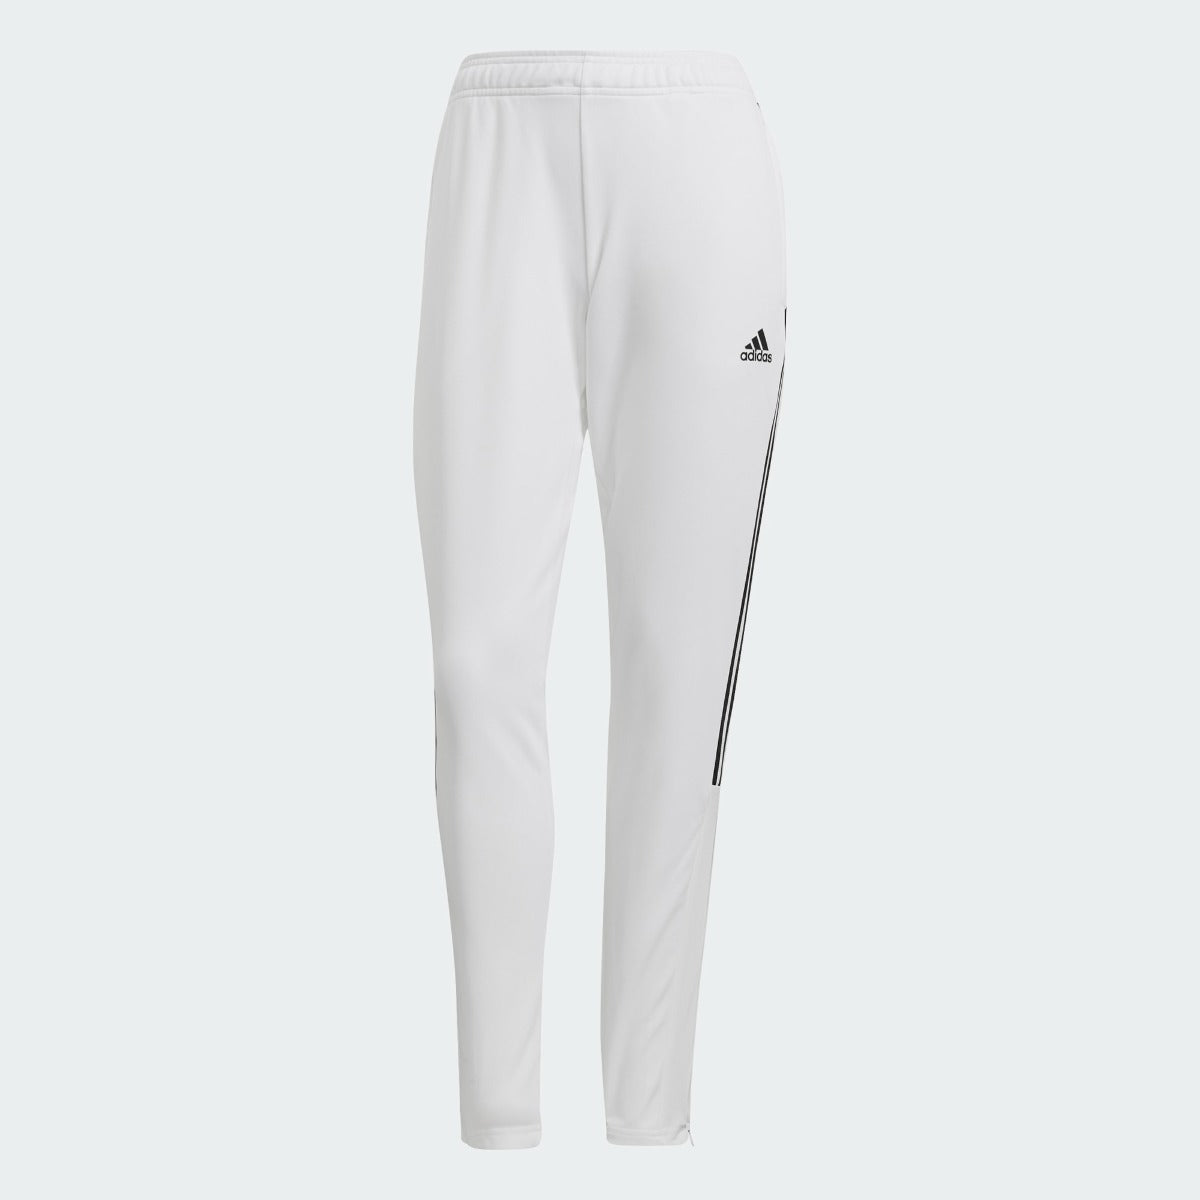 Adidas Women Tiro Track Pants - White-Black (Front)